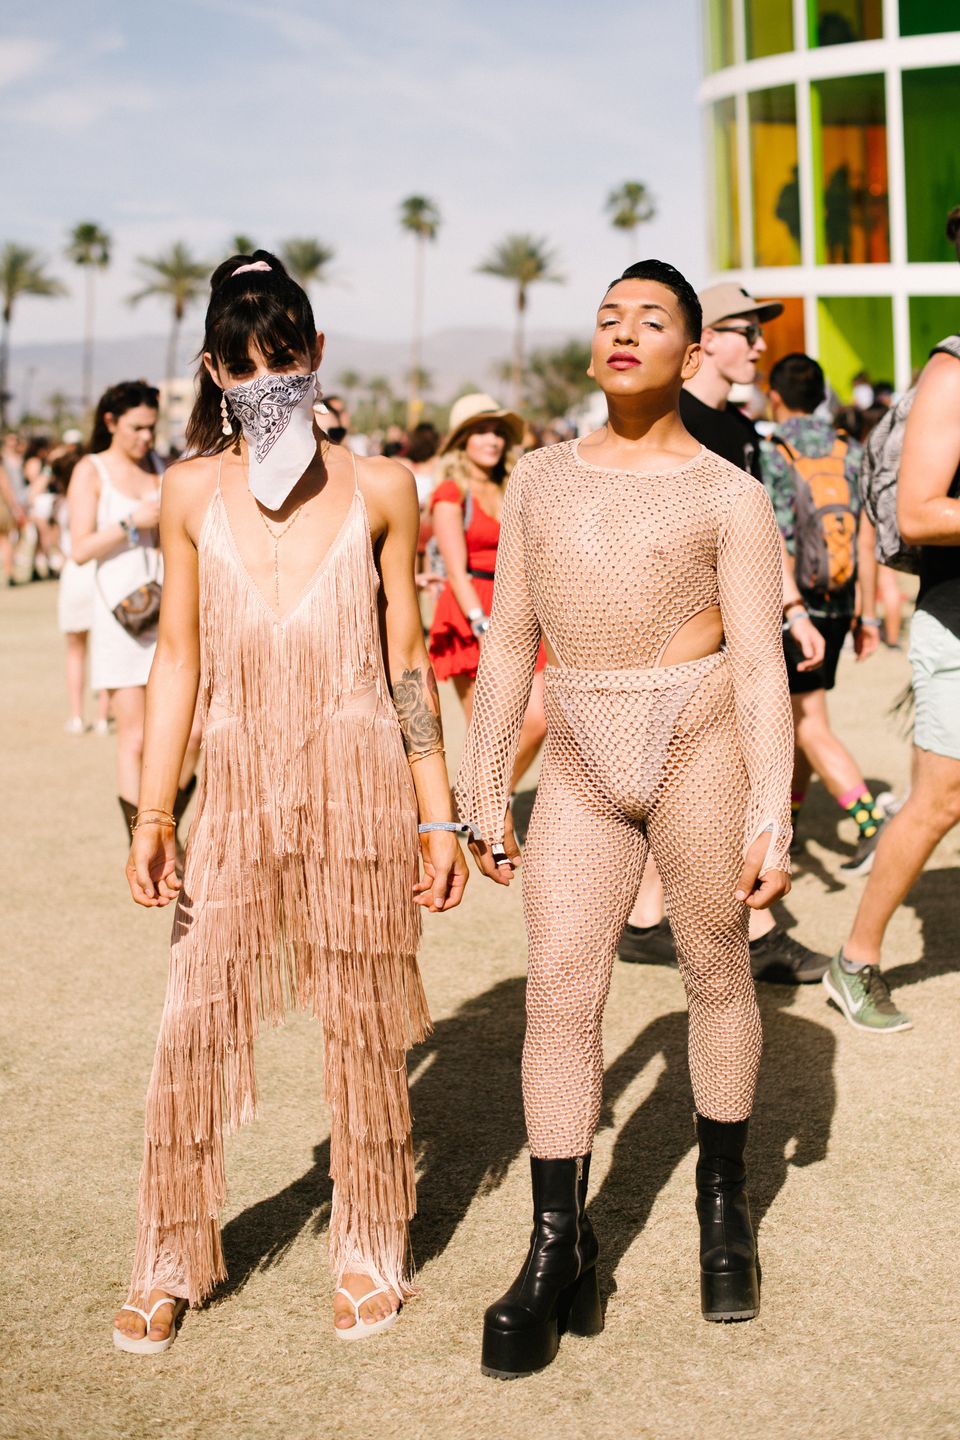 The Best Photos Of Coachella 2019 Fashion